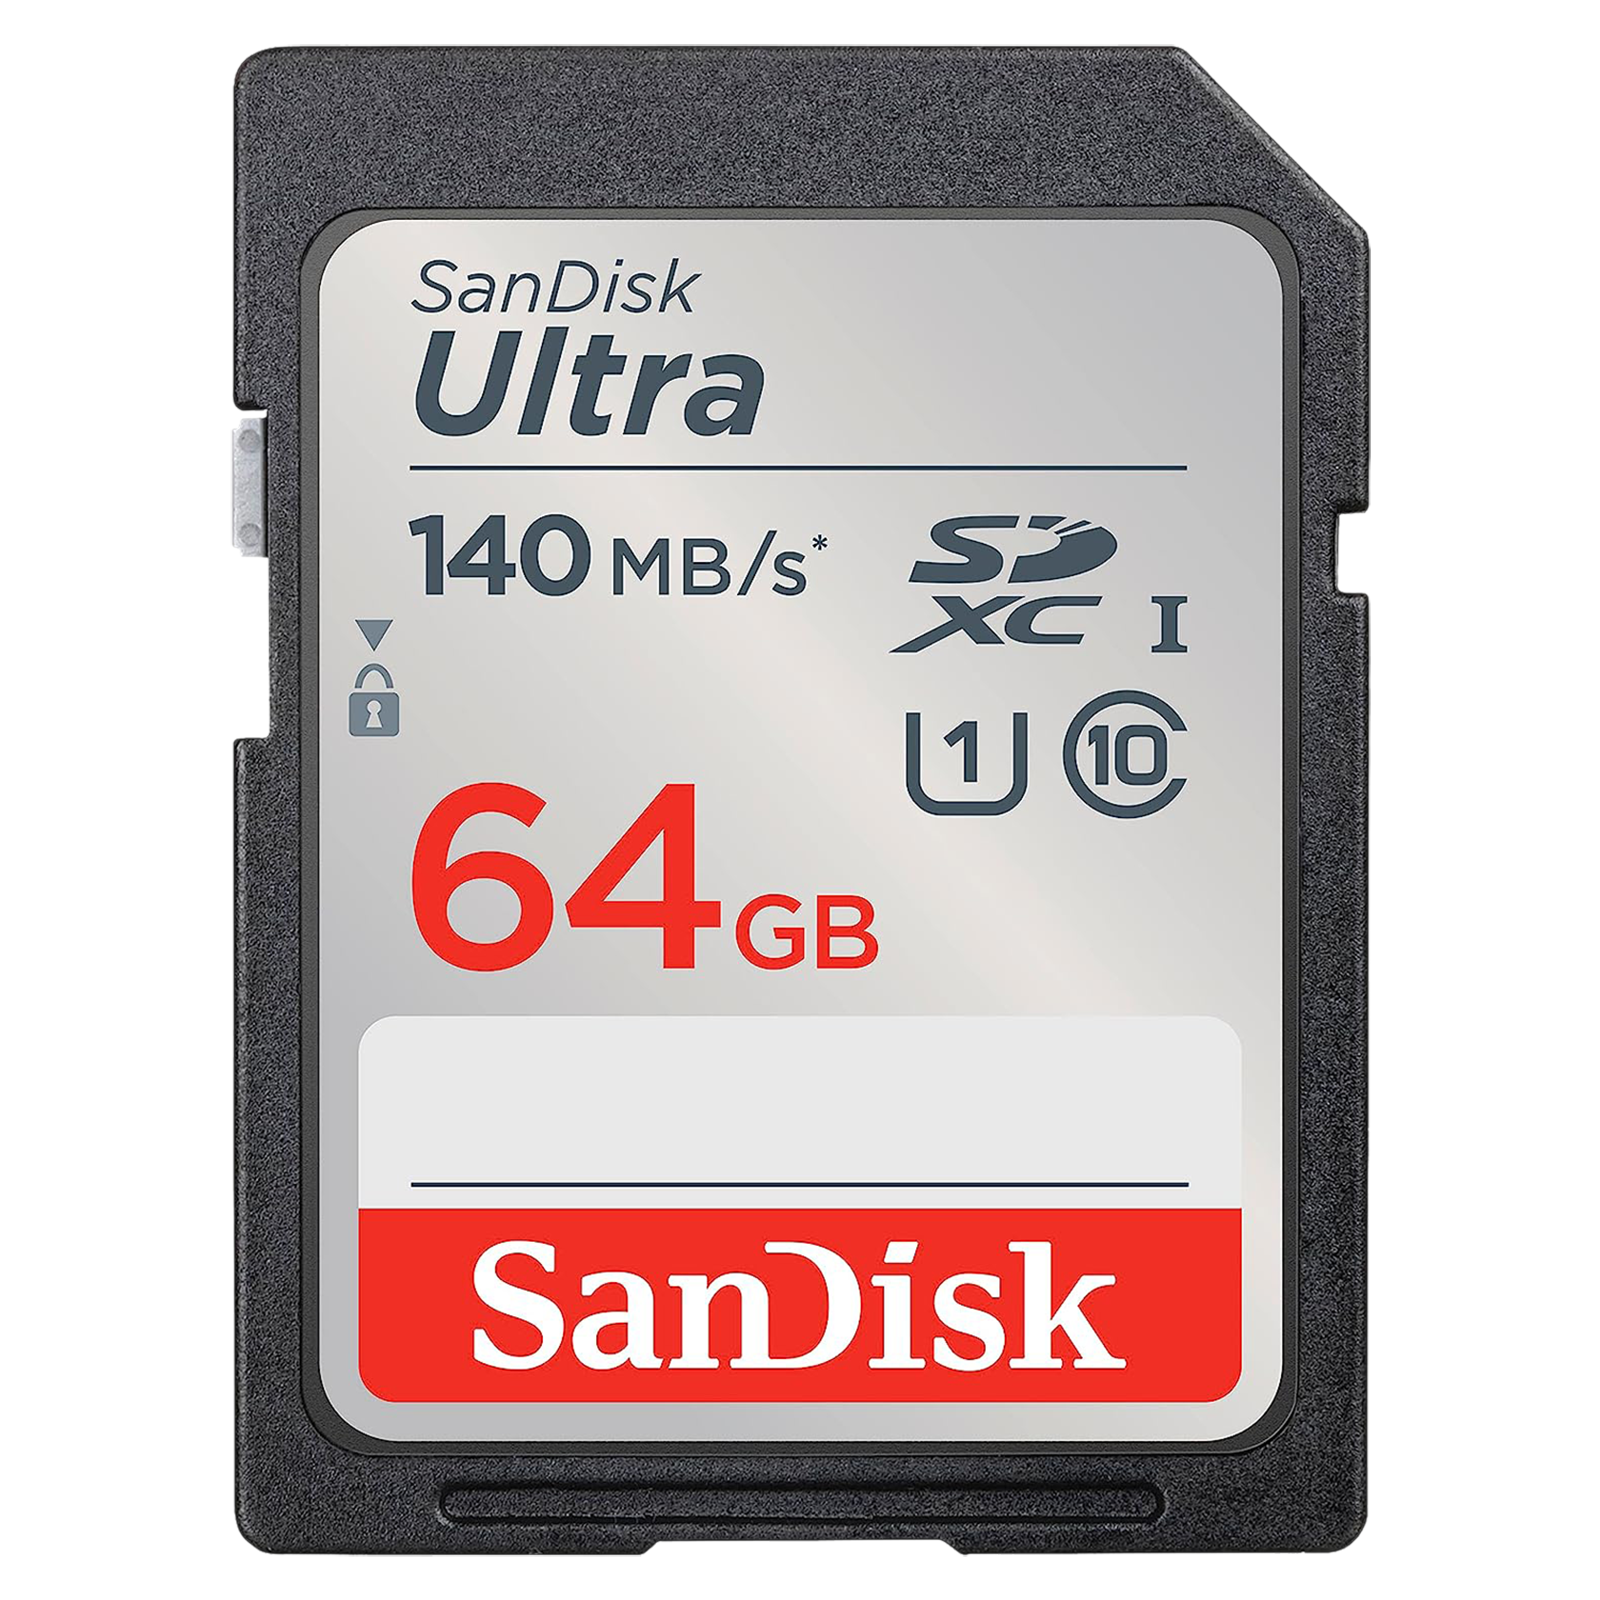 SanDisk Ultra SDXC 64GB Class 10 140MB/s Memory Card